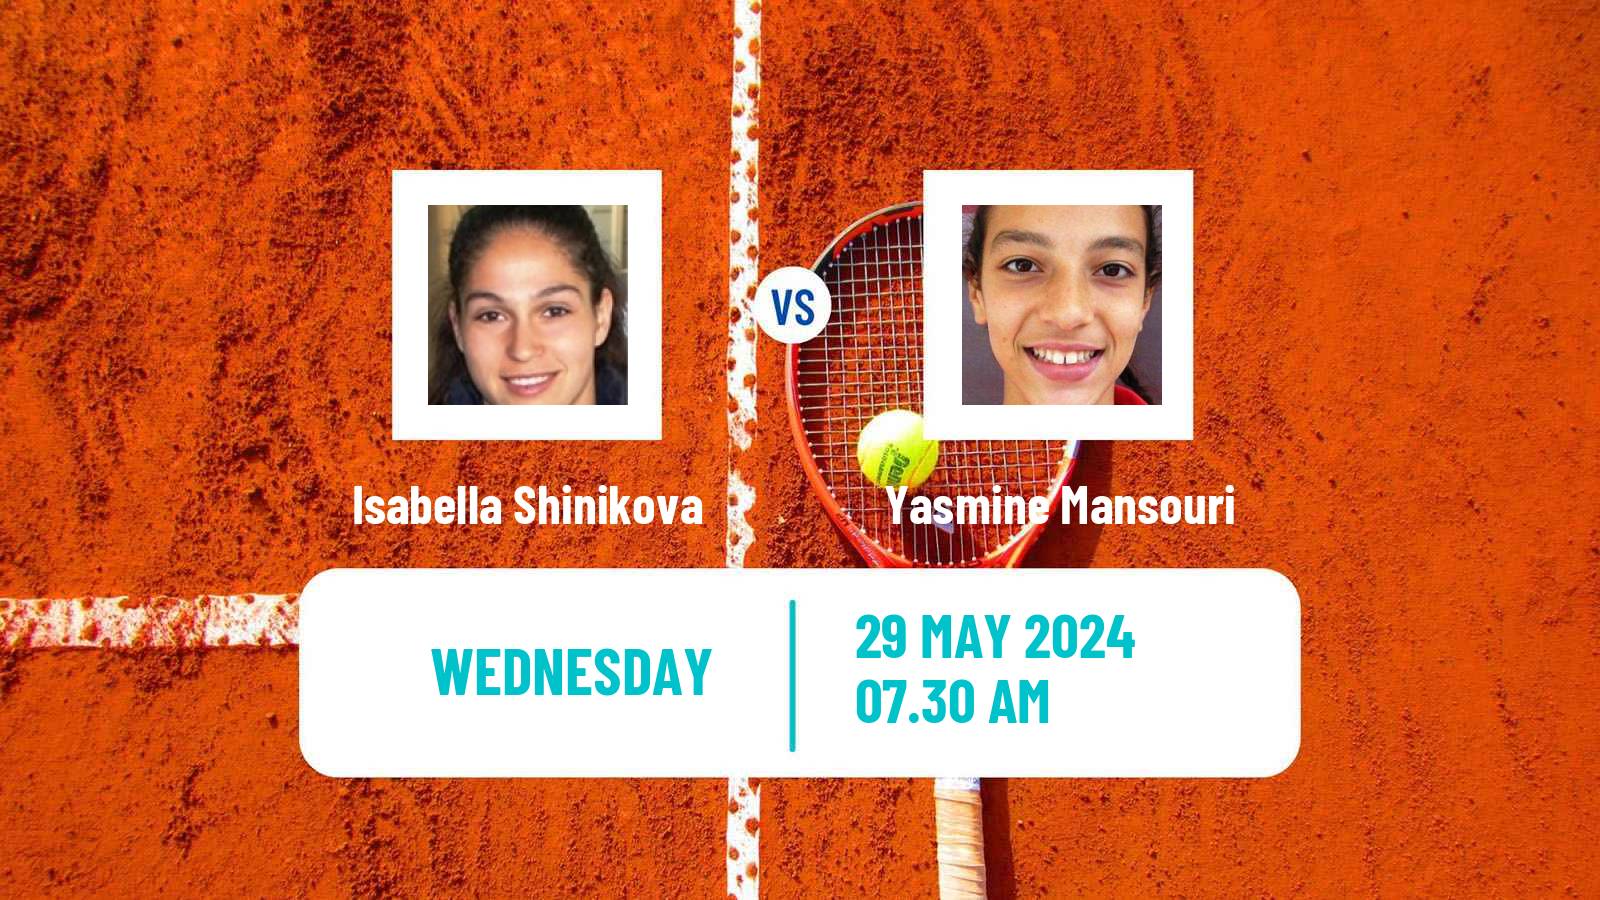 Tennis ITF W35 La Marsa Women Isabella Shinikova - Yasmine Mansouri